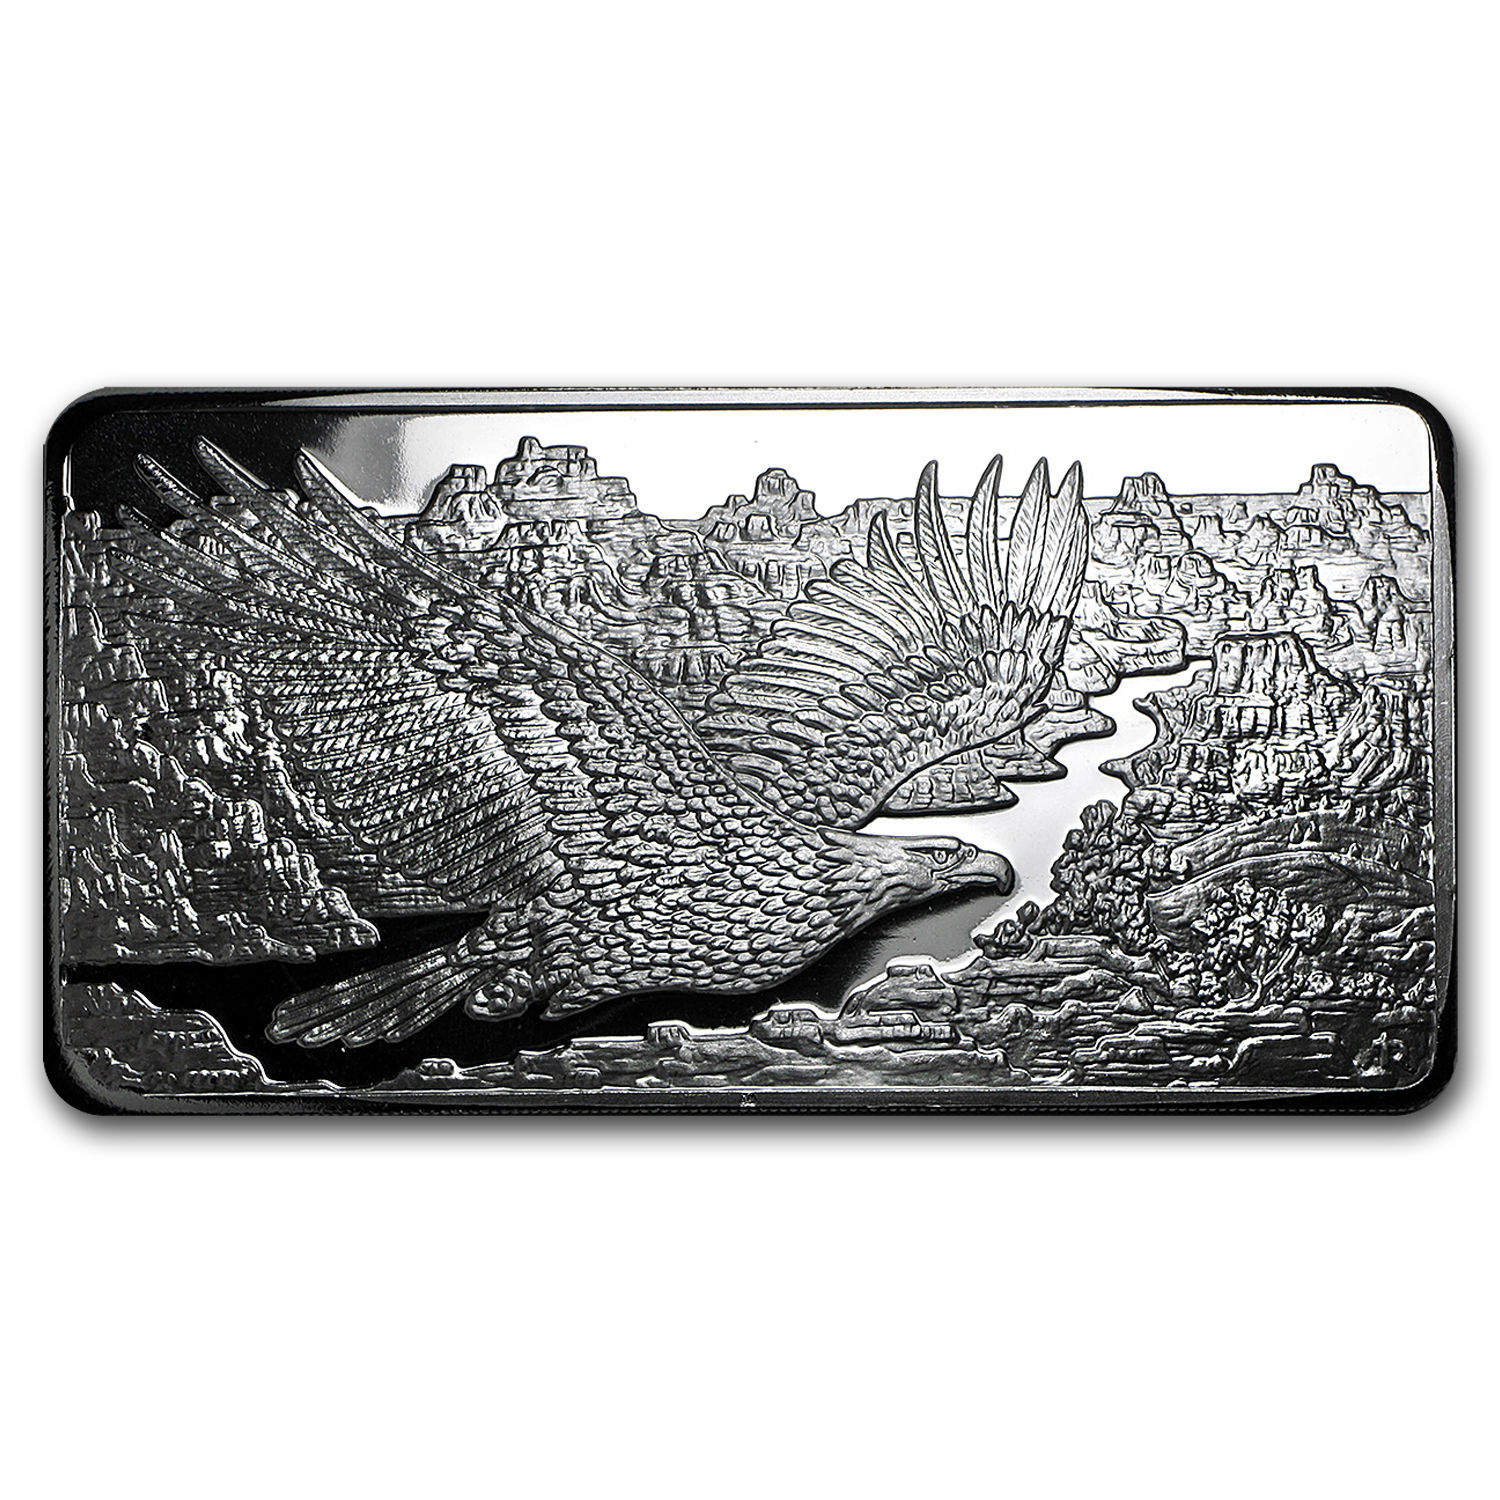 10 oz Silver Bar - Republic Metals Corp. Eagle Design (RMC) - SKU #103152